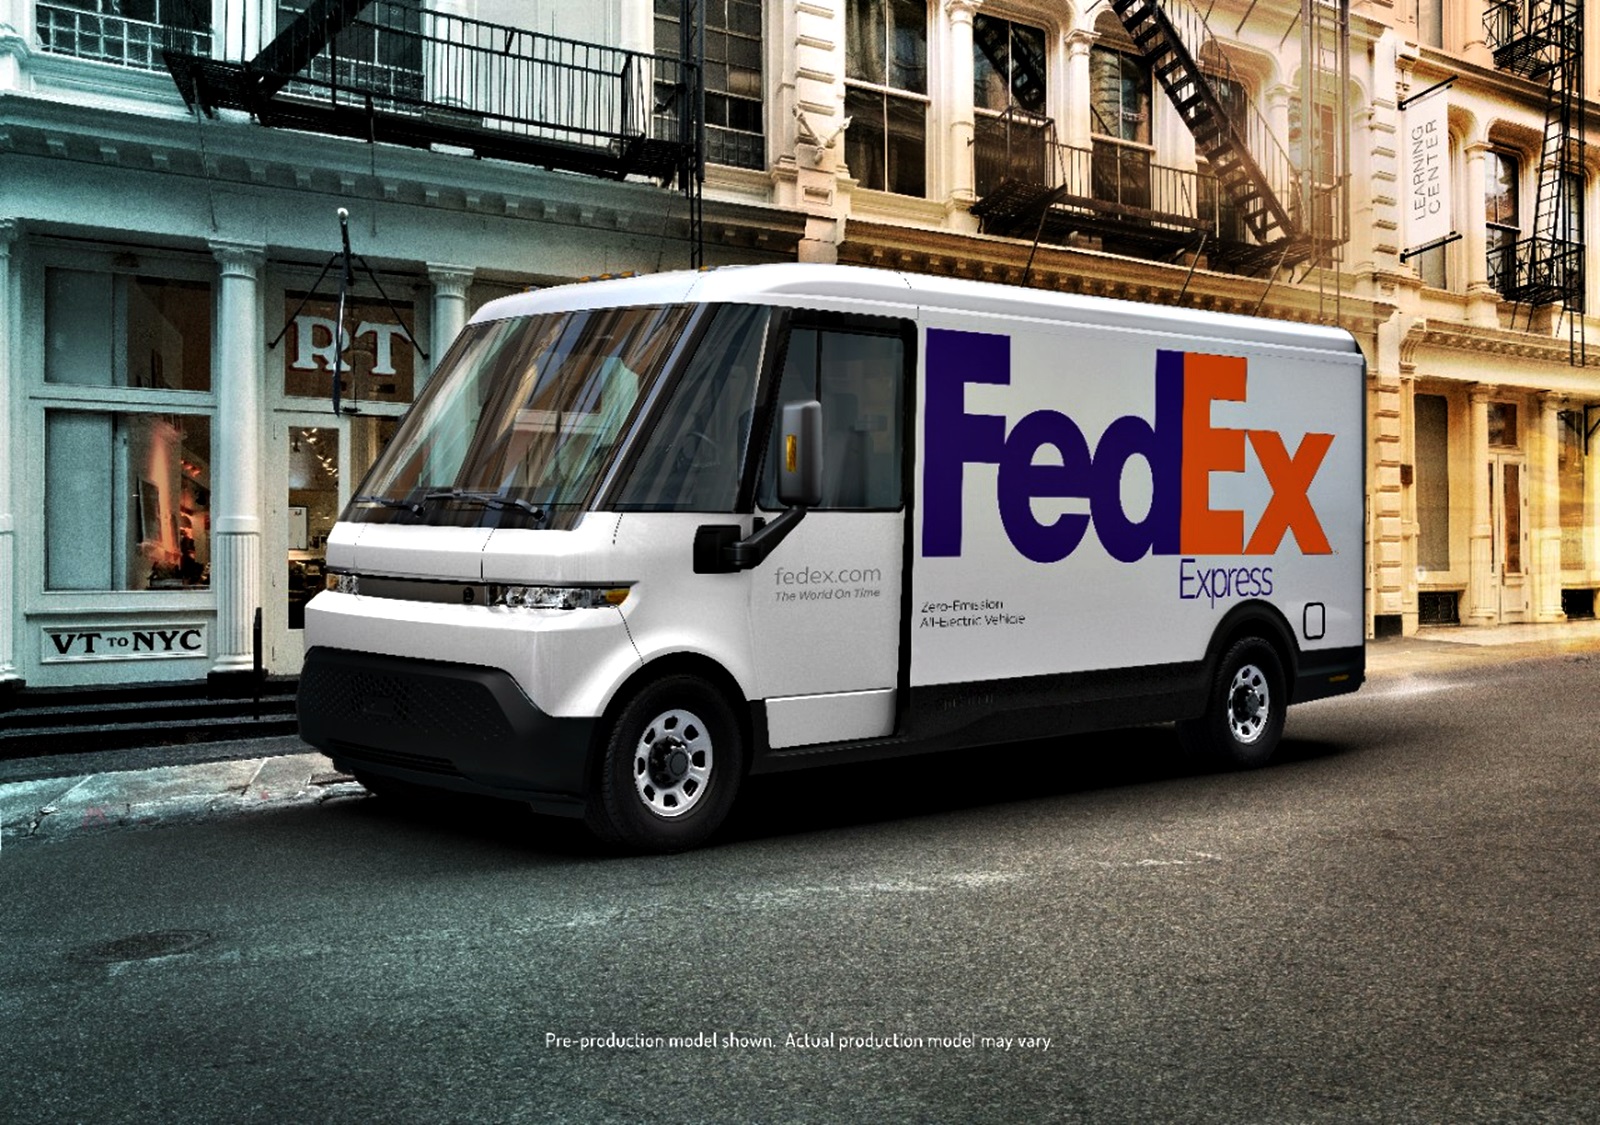 Brightdrop Ev600 With Fedex Express Branding